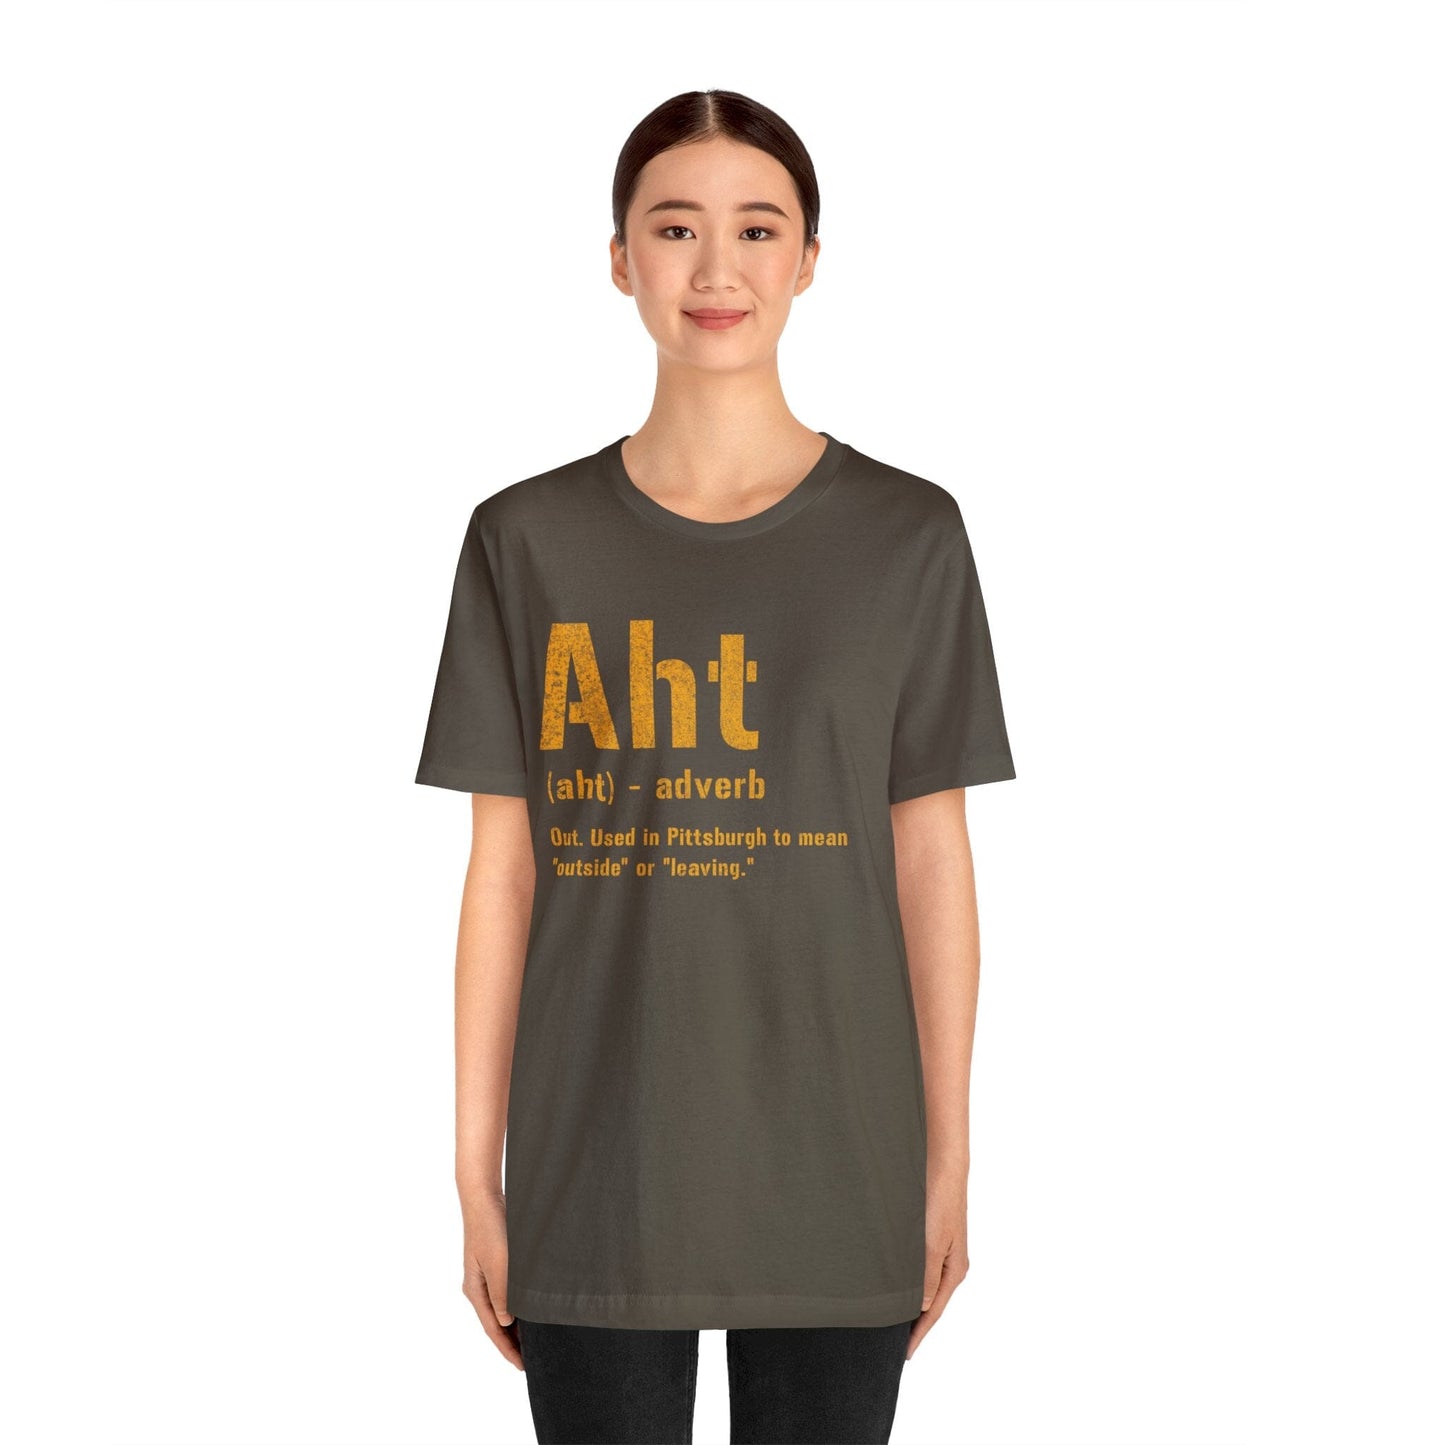 Pittsburghese Aht T-Shirt - Celebrate Steel City Slang | Authentic Yinzer Wear by Yinzergear T-Shirt Yinzergear 